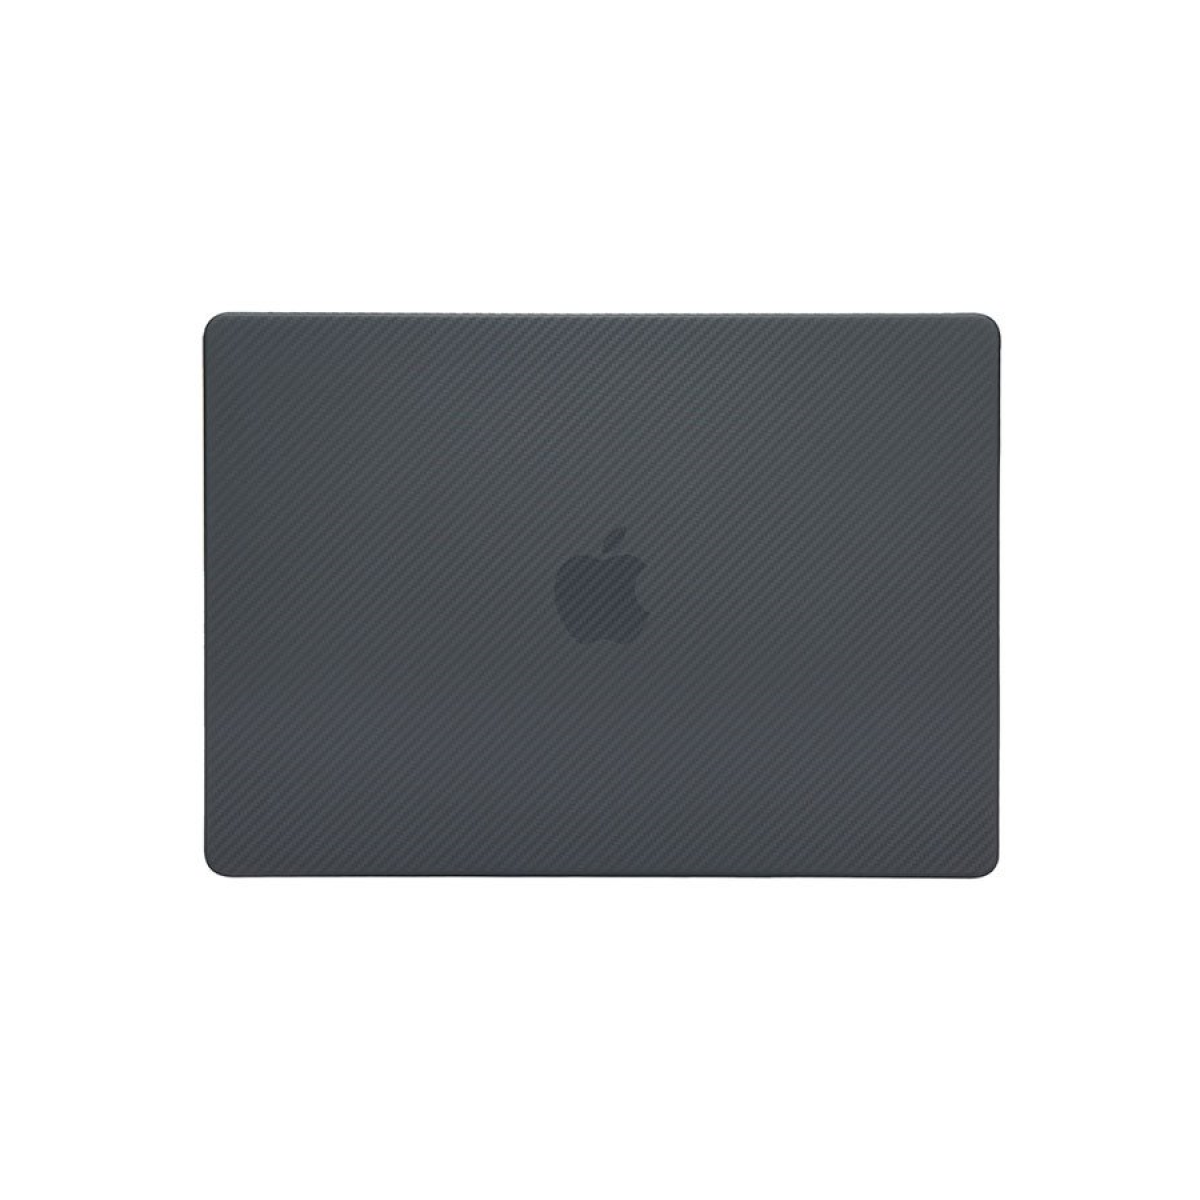 Carcasa protectora hardsell fibra carbono para macbook 13' 2020 devia - Matt black 